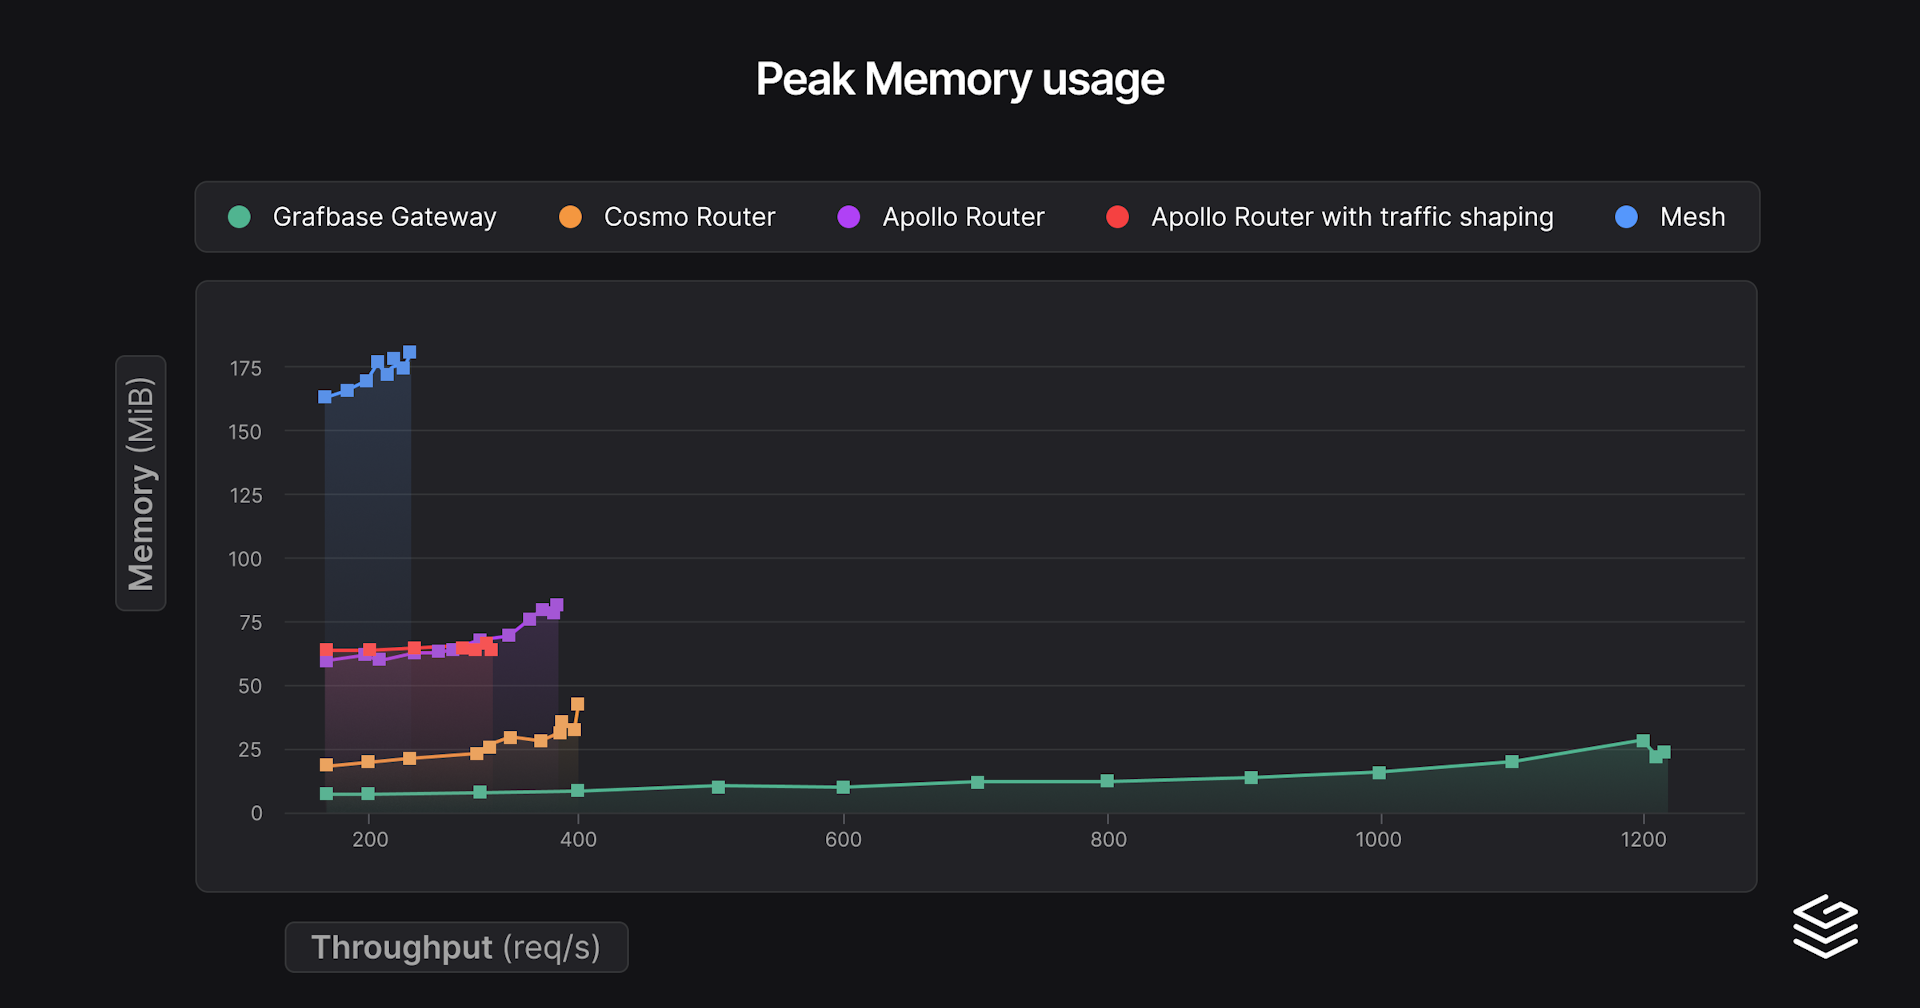 Peak memory usage